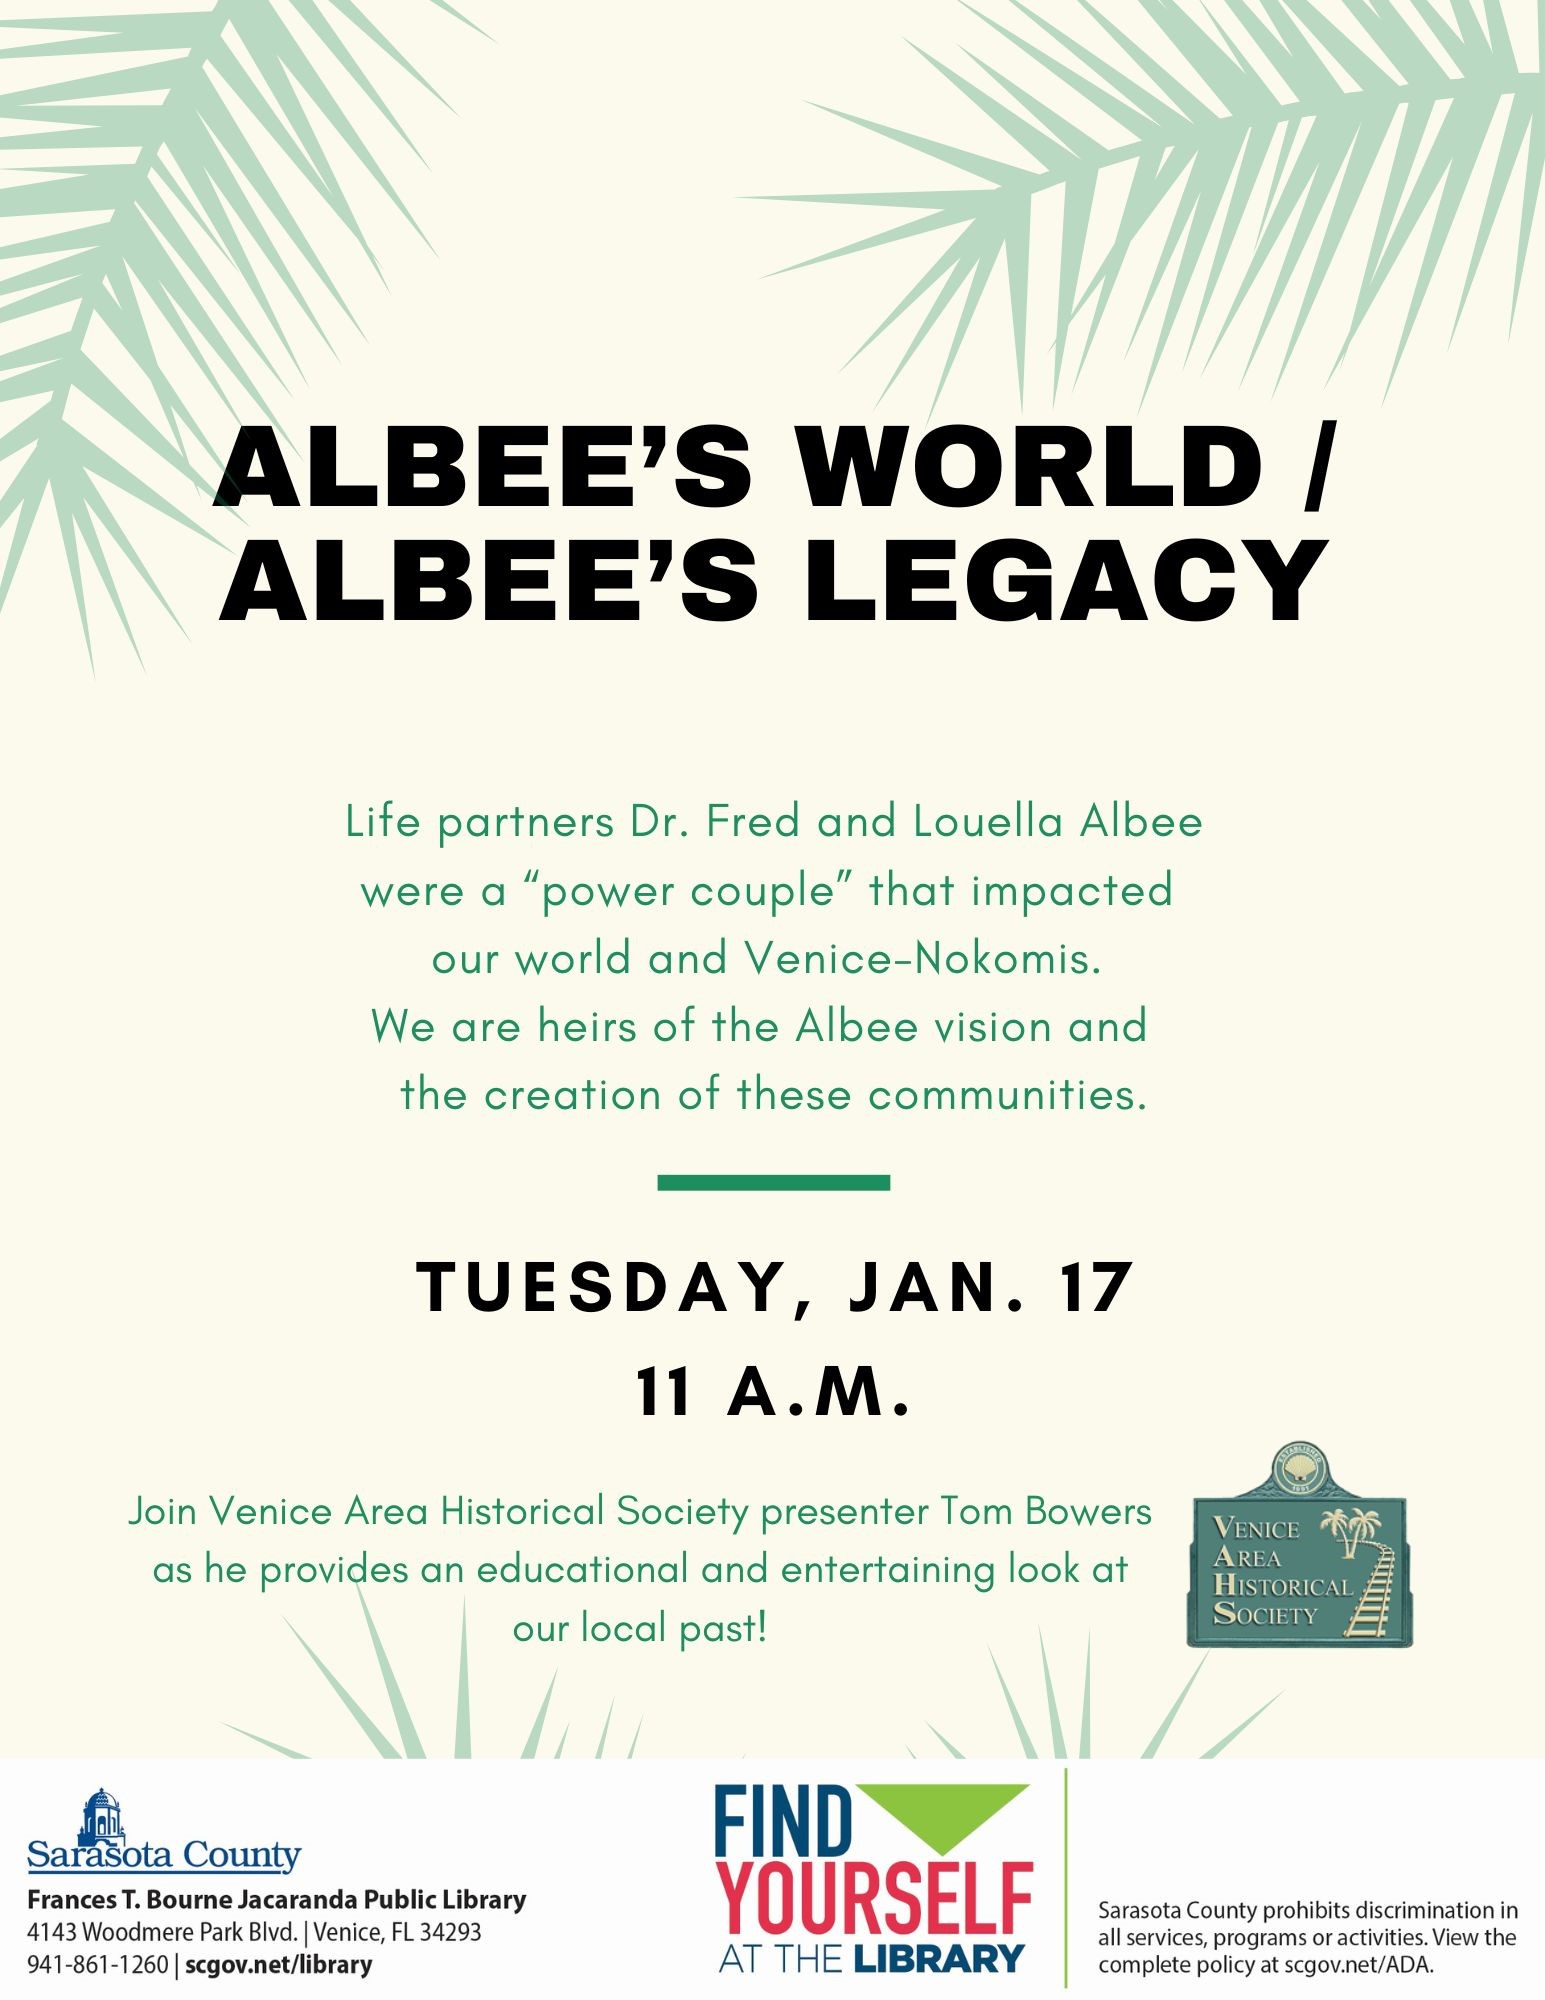 Albee's World Program